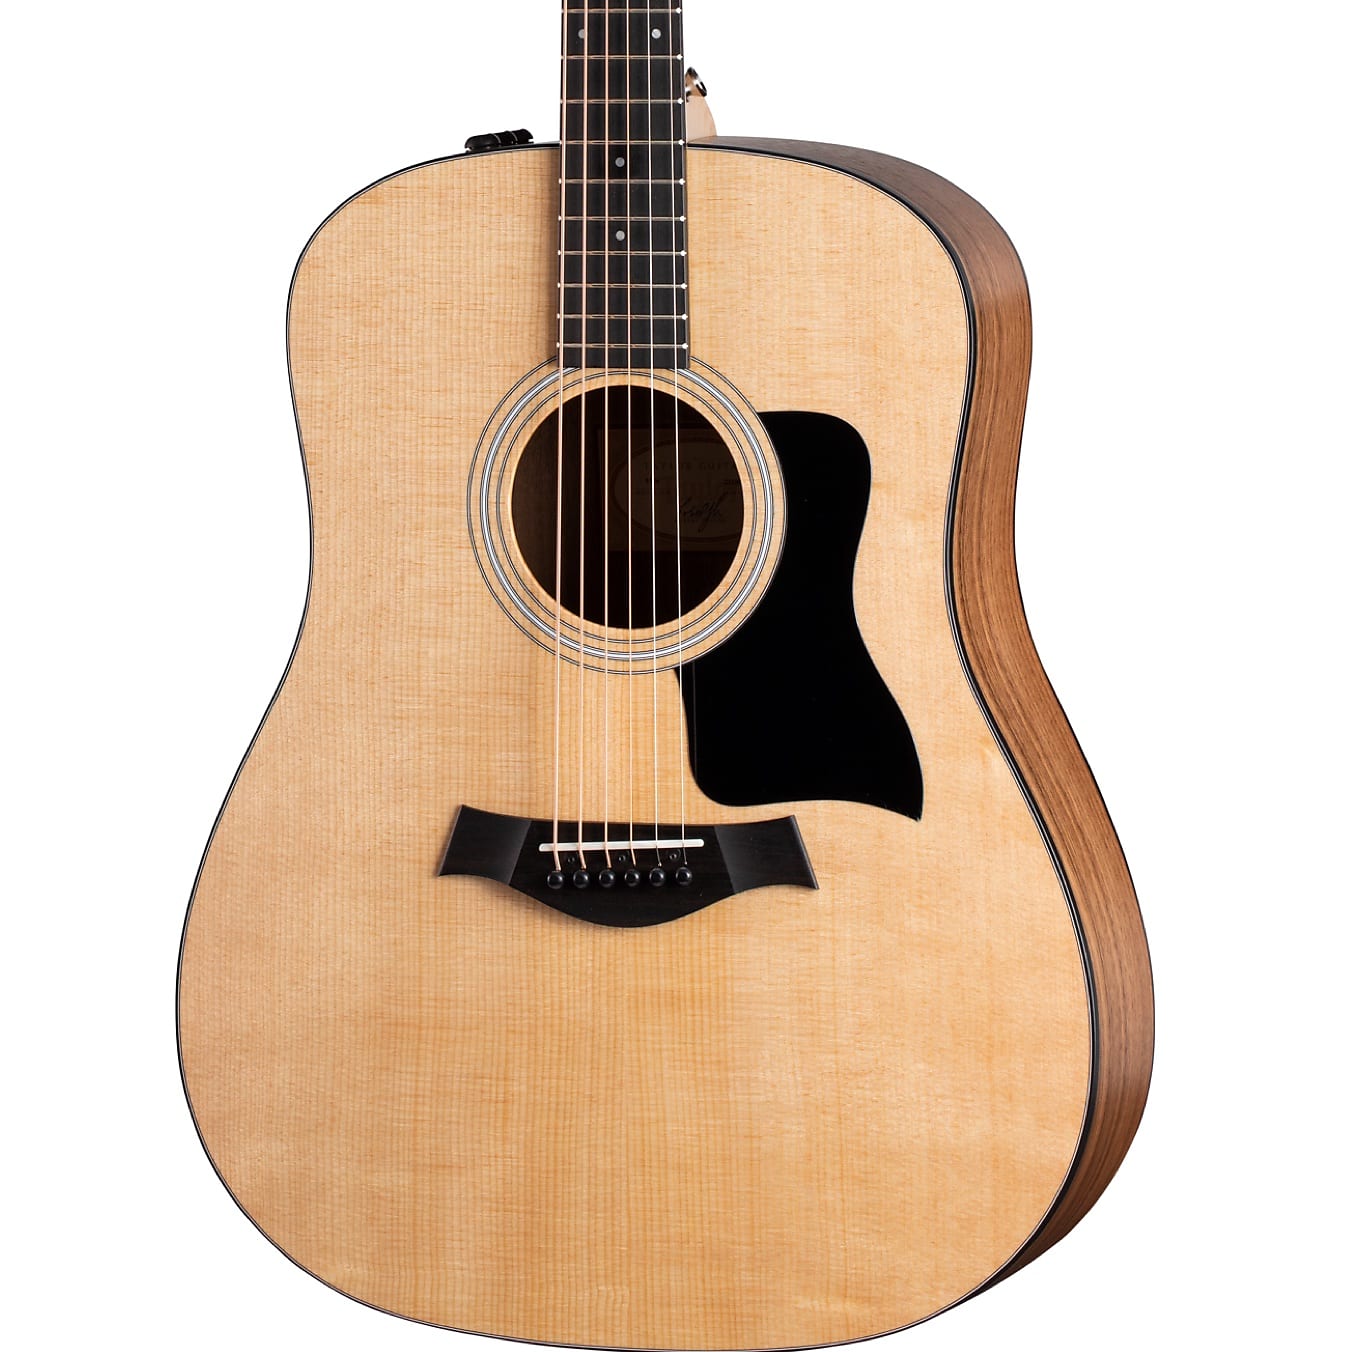 Taylor 110e Dreadnought Acoustic Electric Guitar